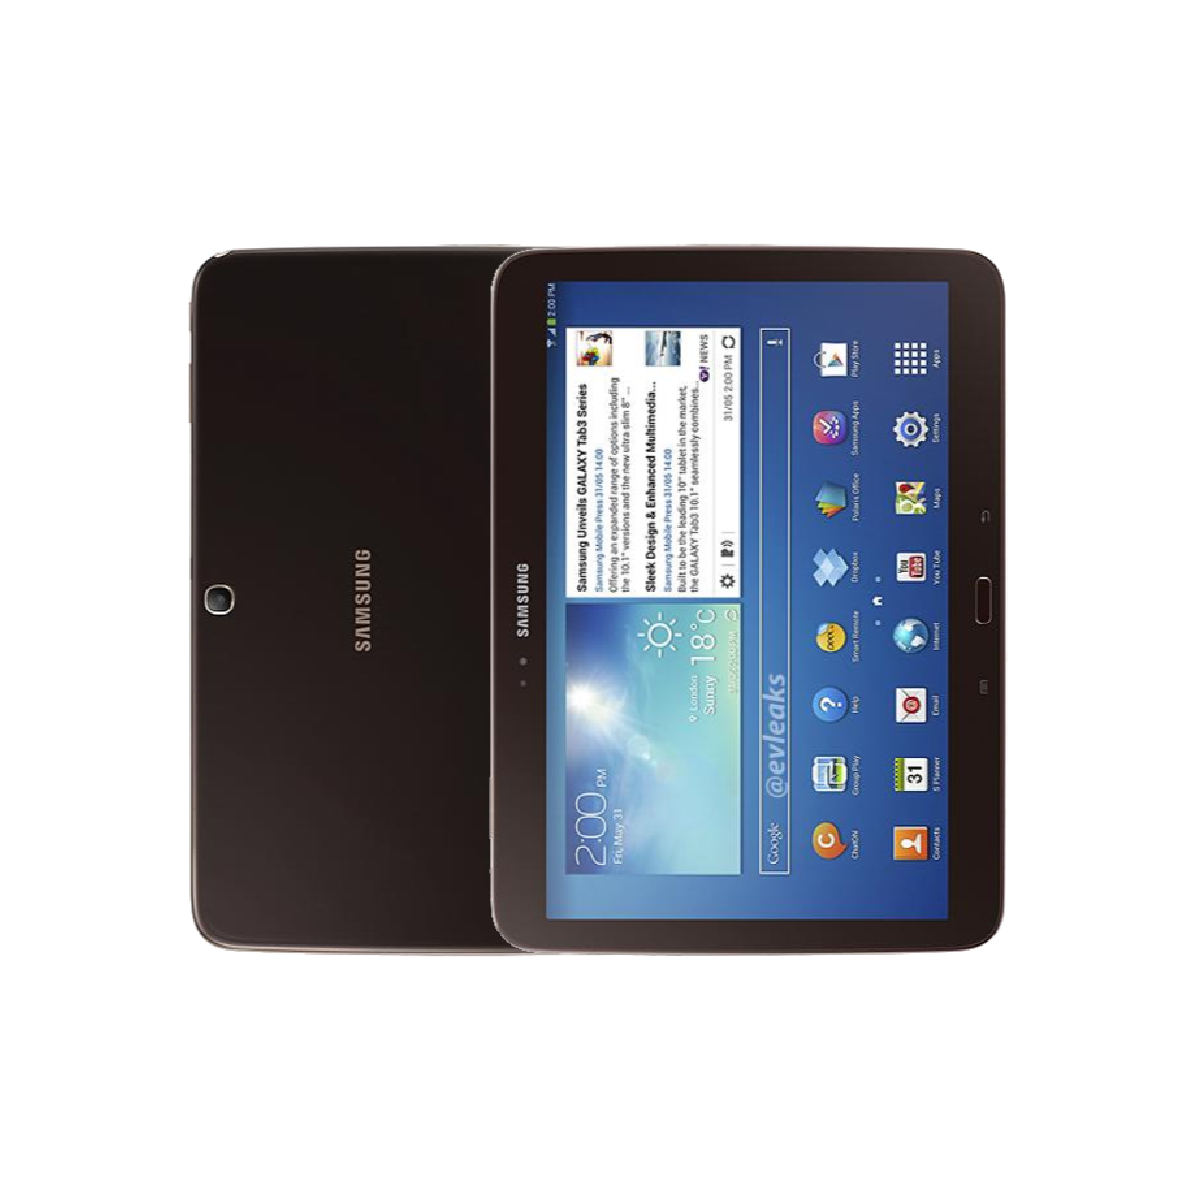 Samsung Galaxy Tab 3 10.1" (P5220 / 2013) WiFi + 4G - Good Condition